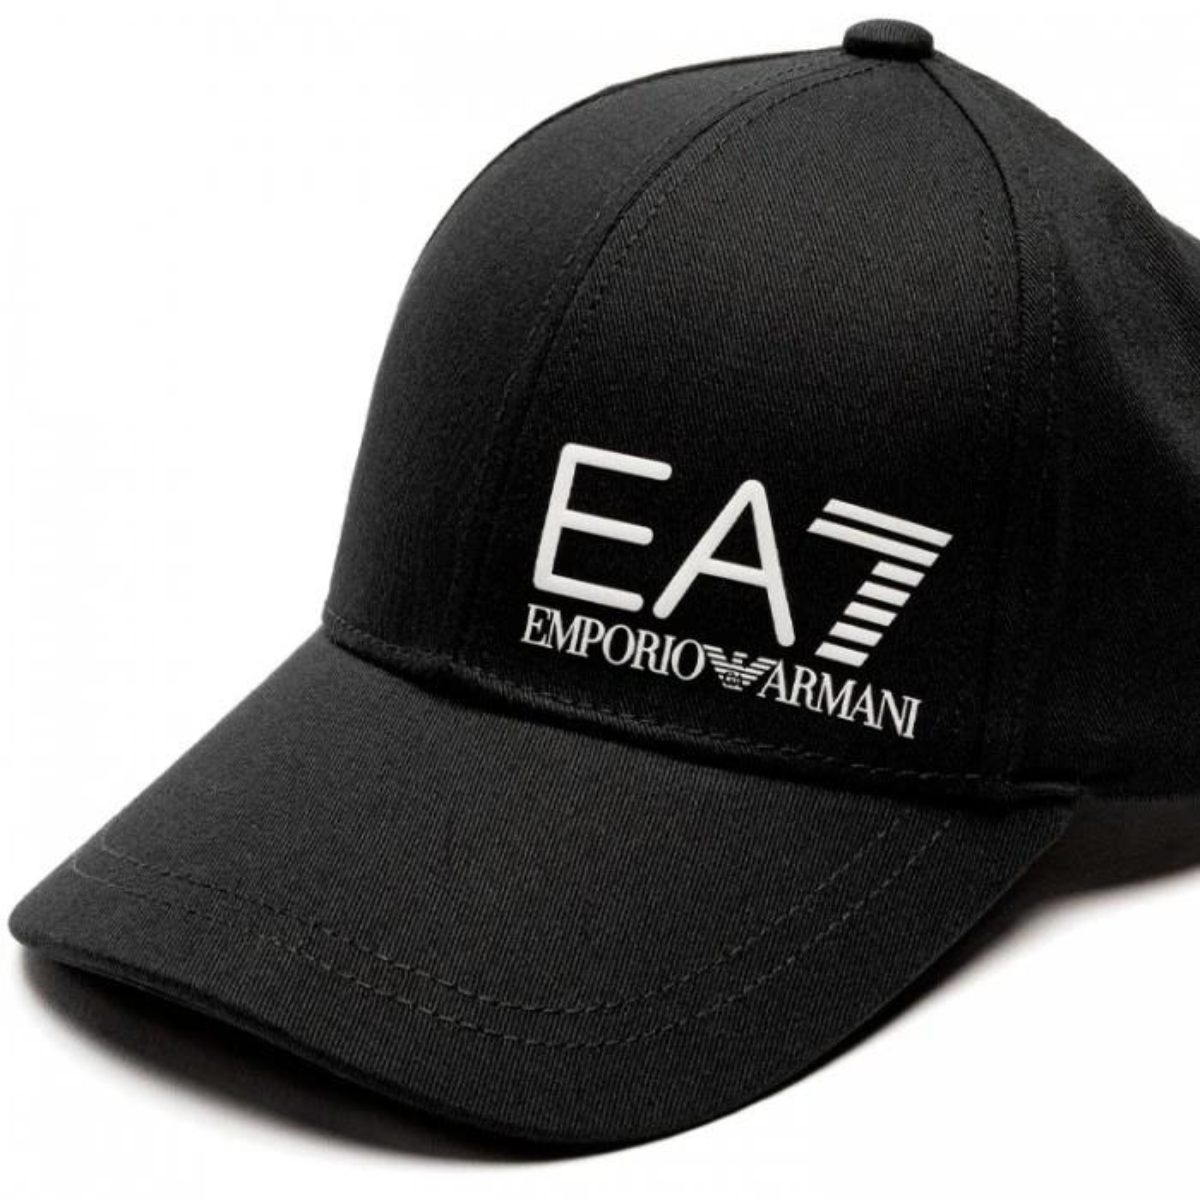 EA7 Giorgio Armani - Unisex Woven Baseball Hat - Black Iris/Silver